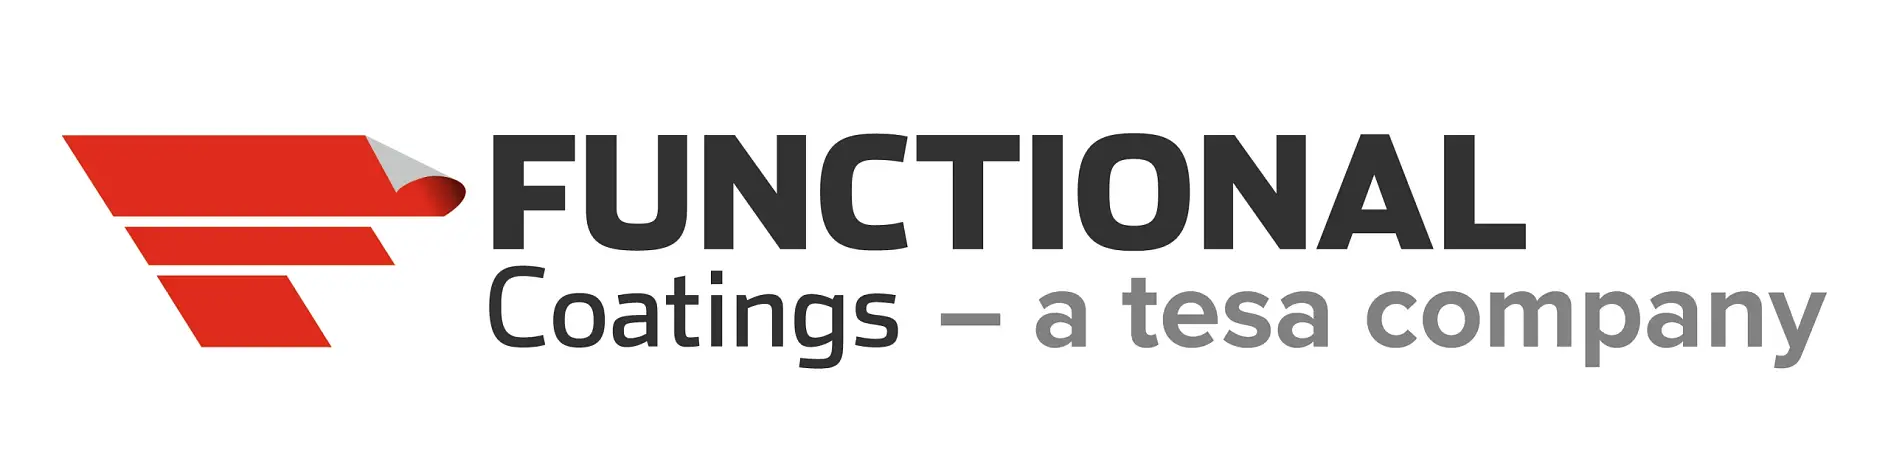 Functional Coatings, LLC logo